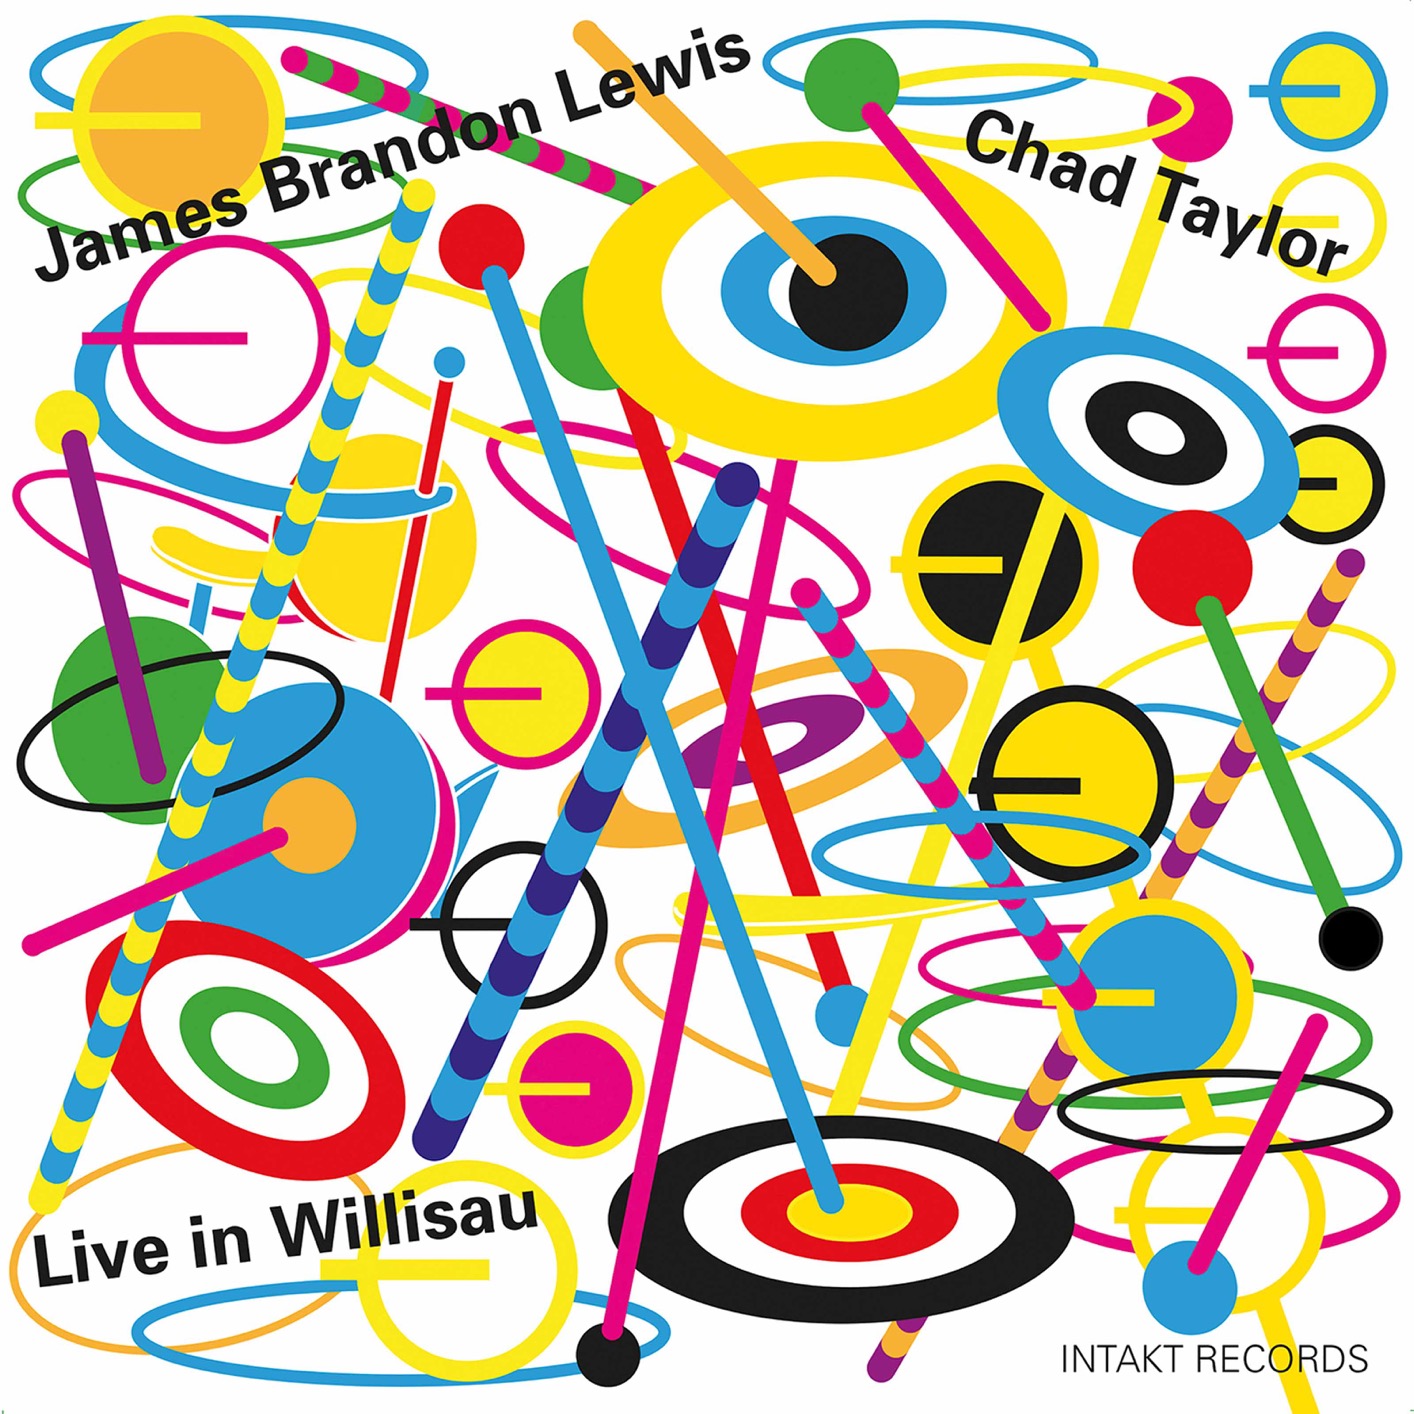 James Brandon Lewis & Chad Taylor – Live in Willisau (Live) (2020) [FLAC 24bit/48kHz]